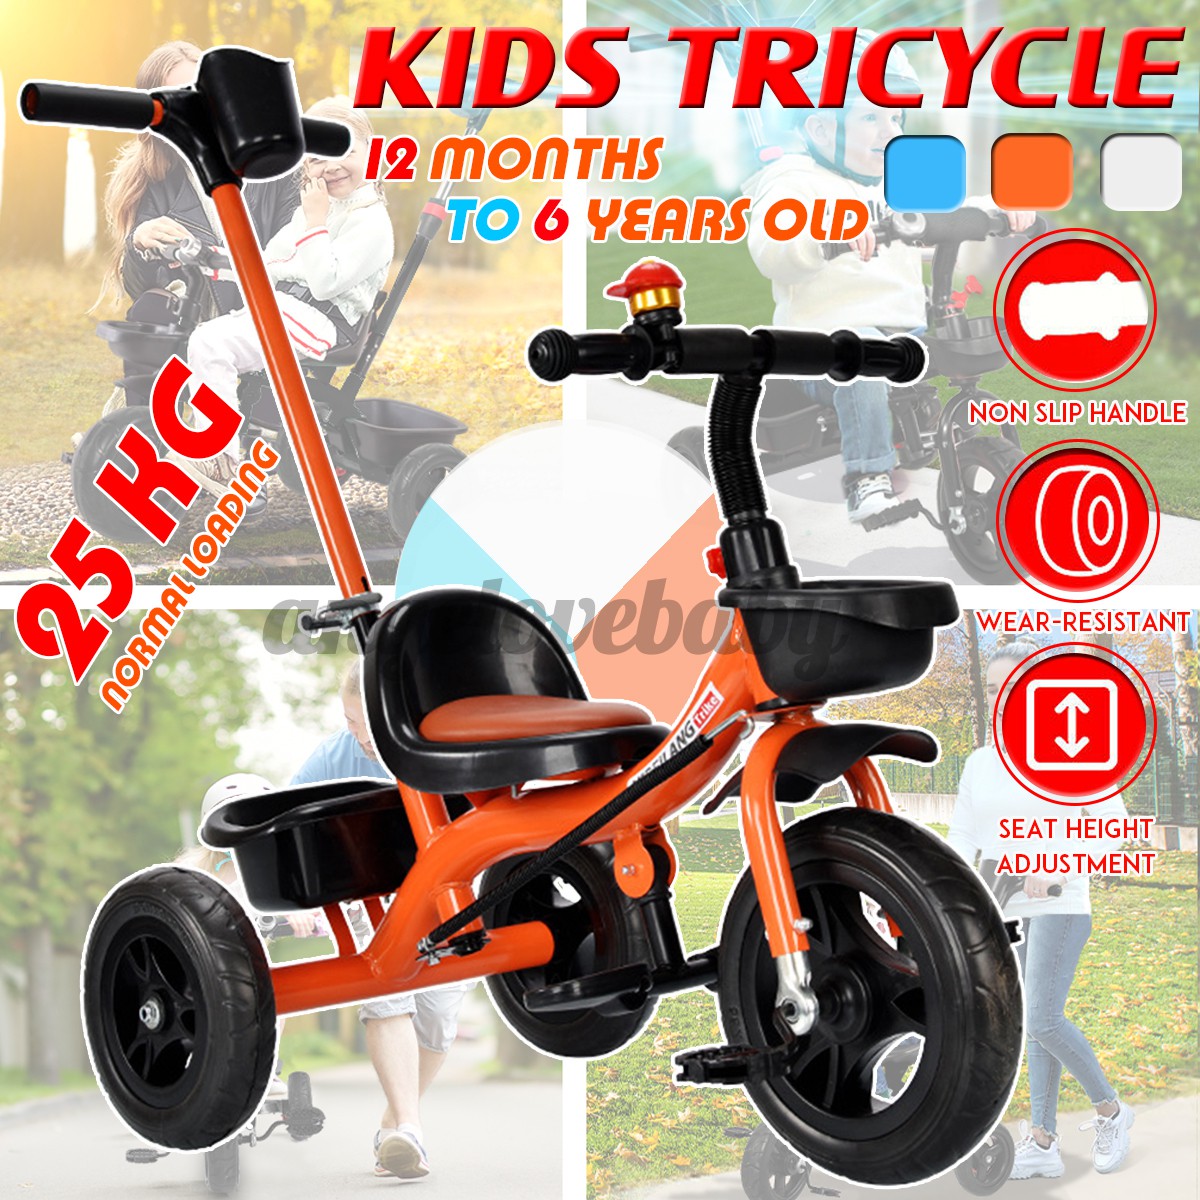 three wheel bike with child seat